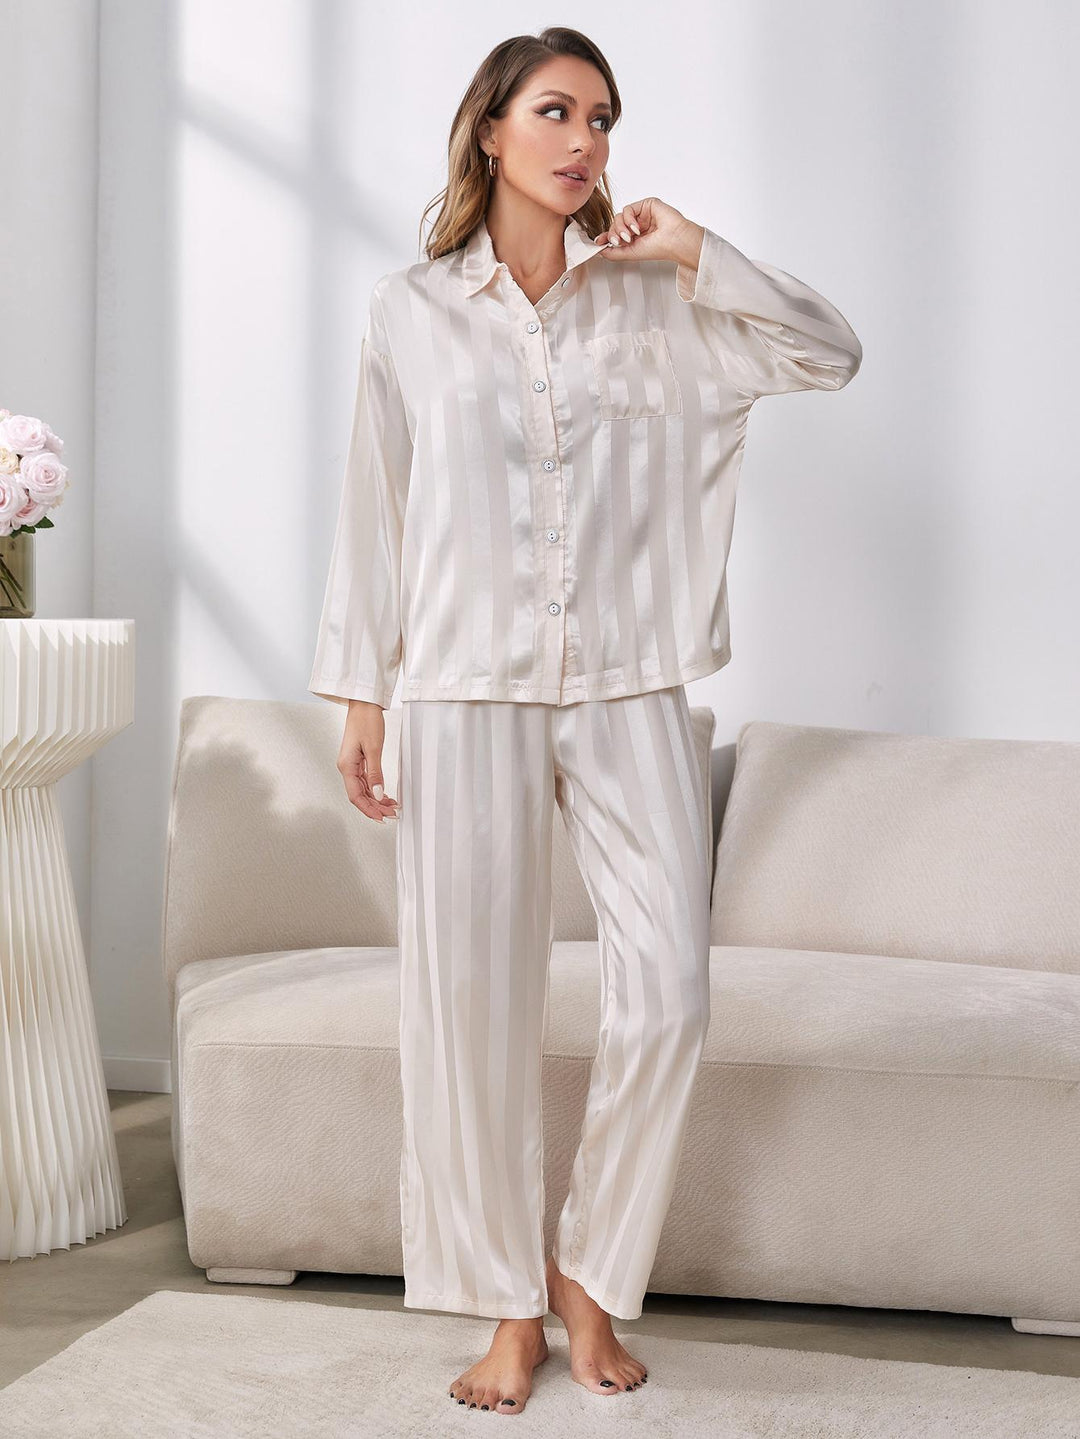 Women's Button - Up Shirt and Pants Pajama Set - GirlSavvi